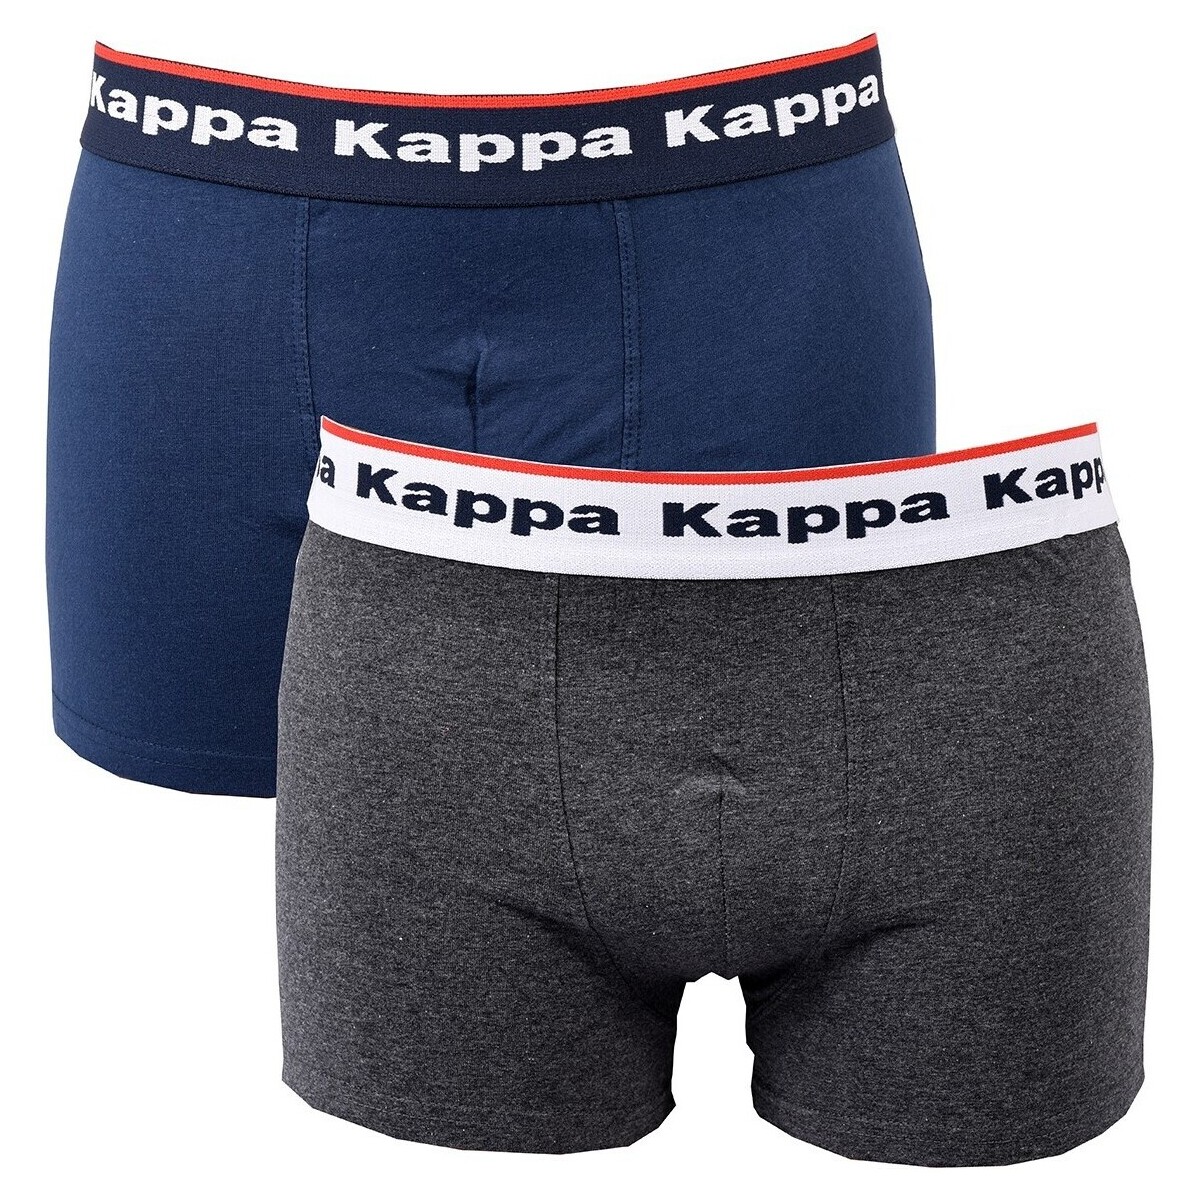 Kappa Multicolore Pack de 2 Boxers 0498 vKVFelcS